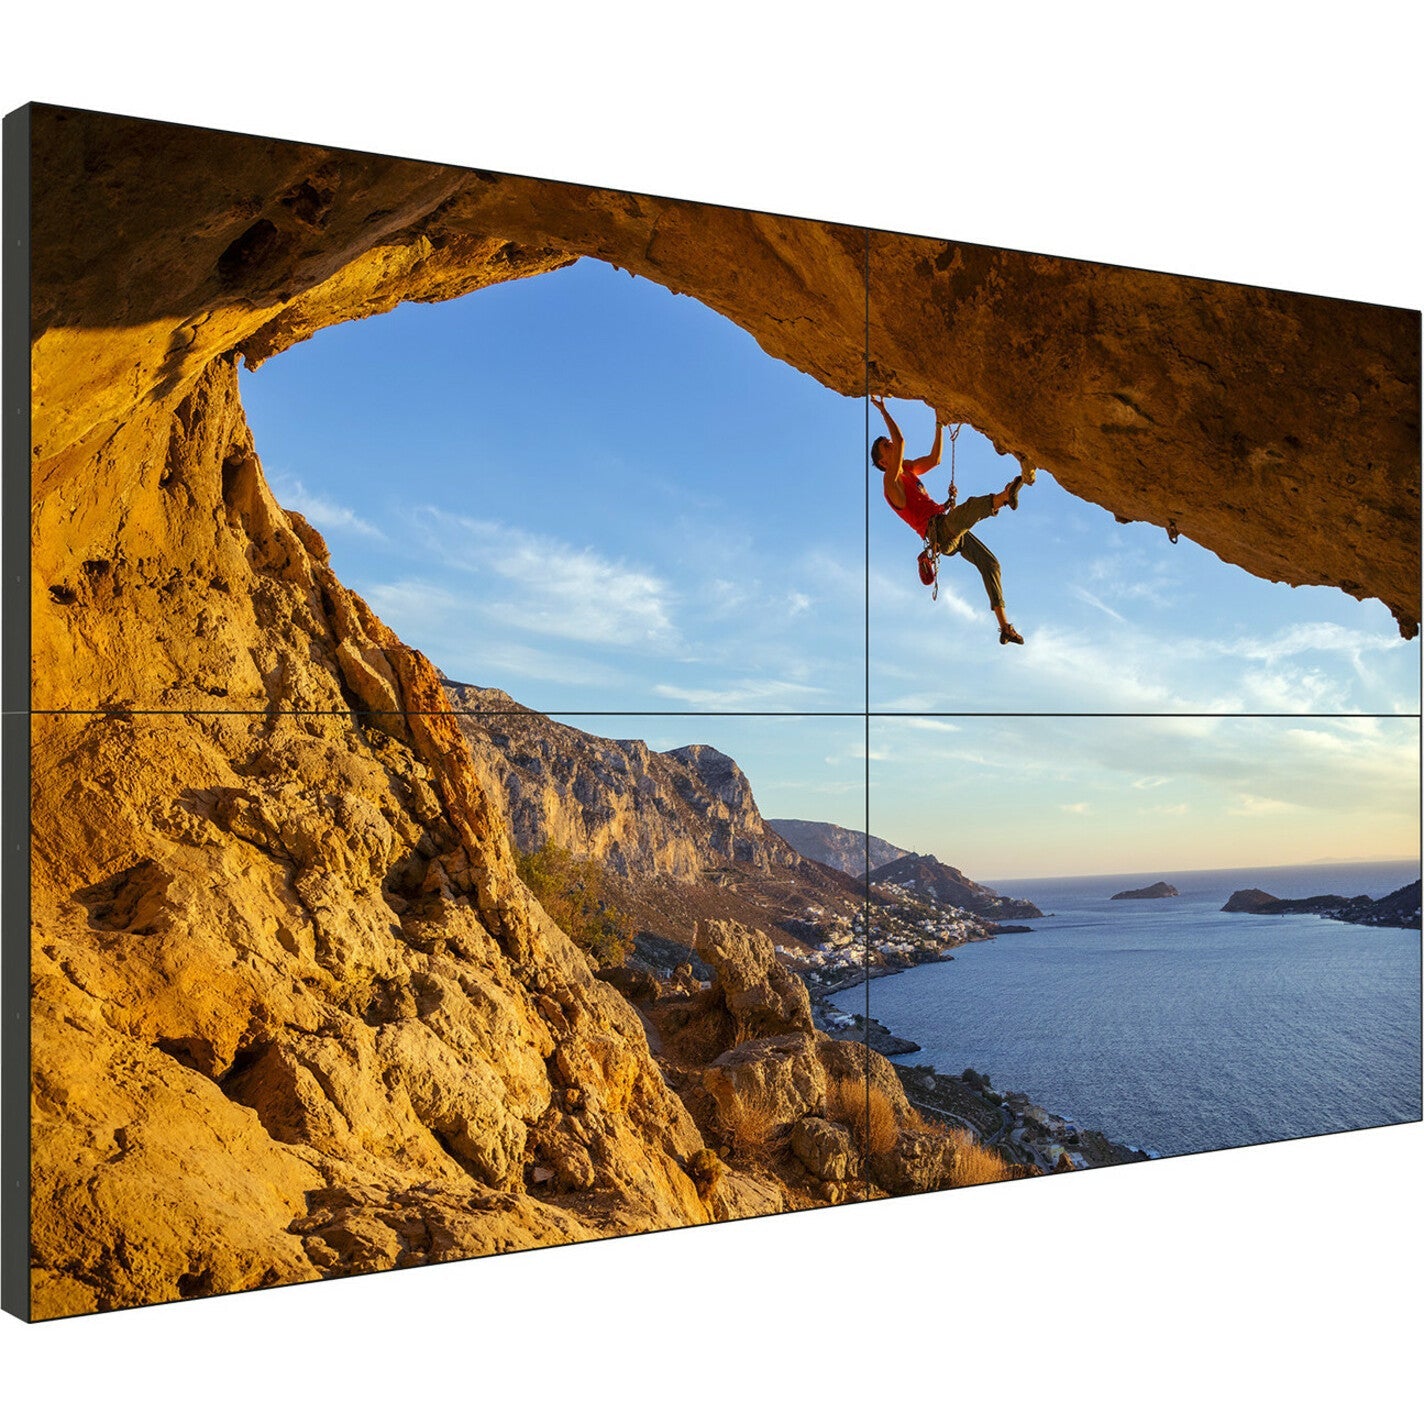 Planar Clarity Matrix G3 MX LCD Video Wall System